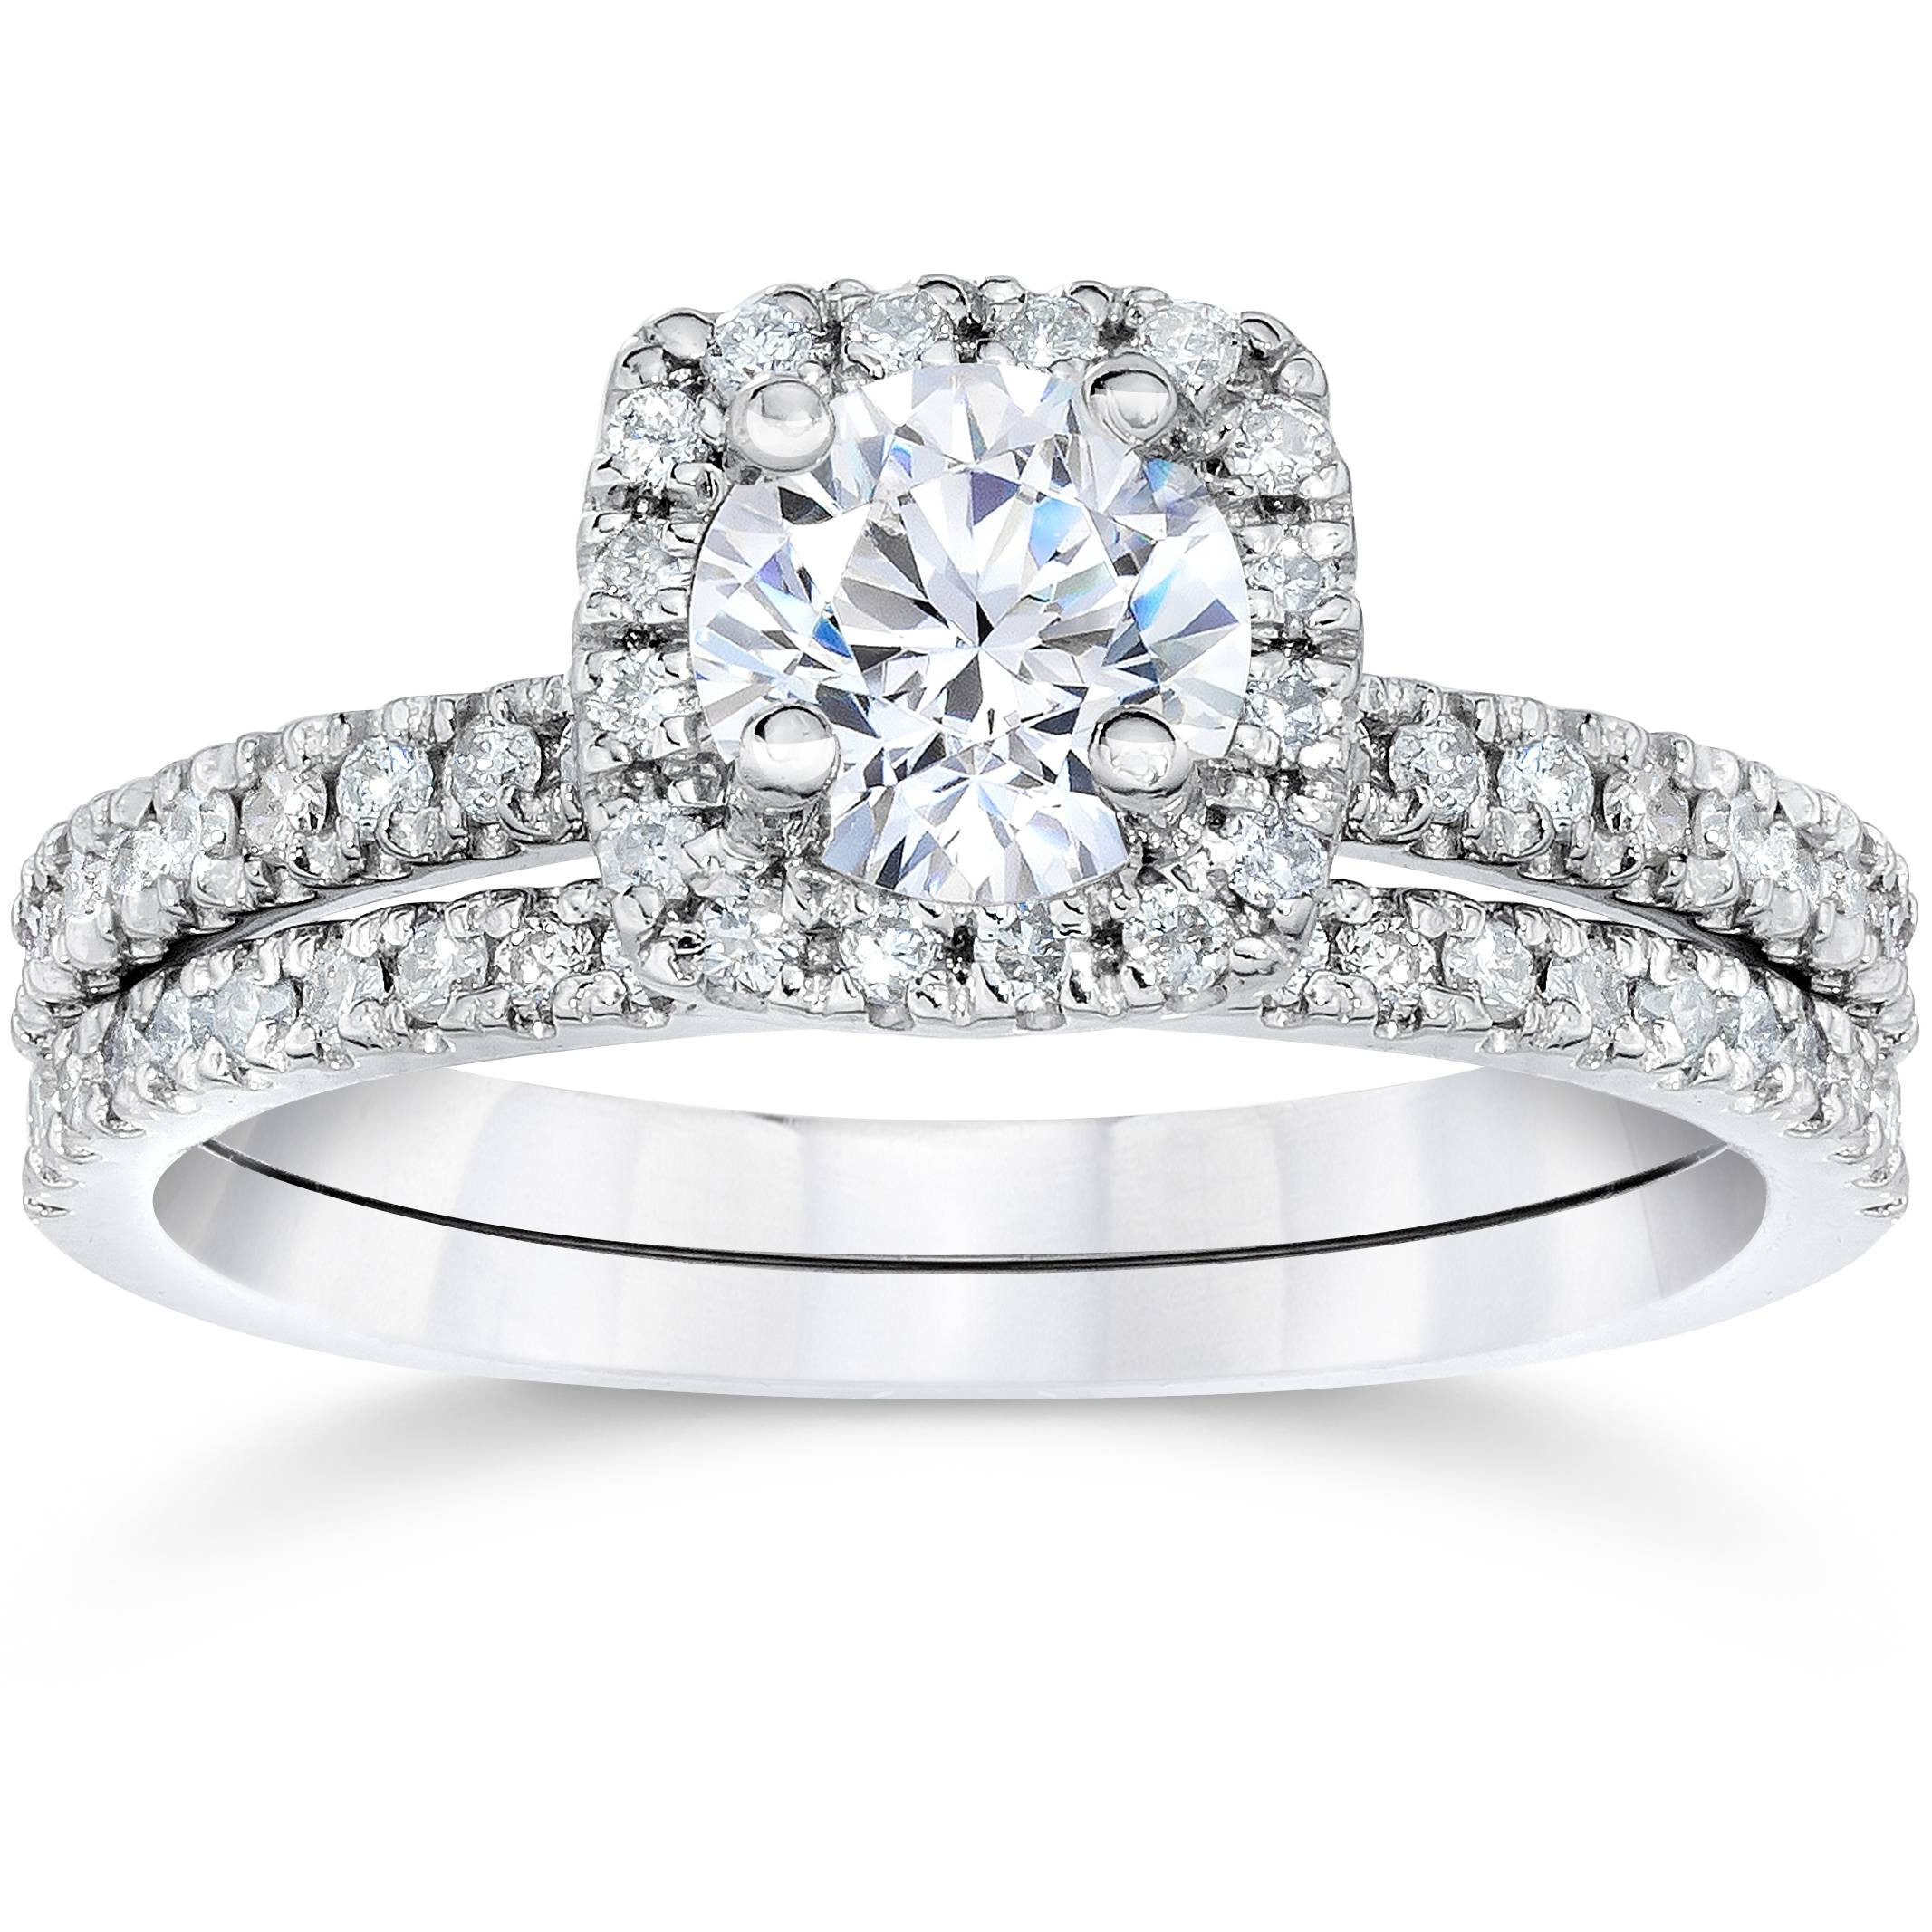 Diamond Wedding Ring Sets For Her
 5 8Ct Cushion Halo Real Diamond Engagement Wedding Ring